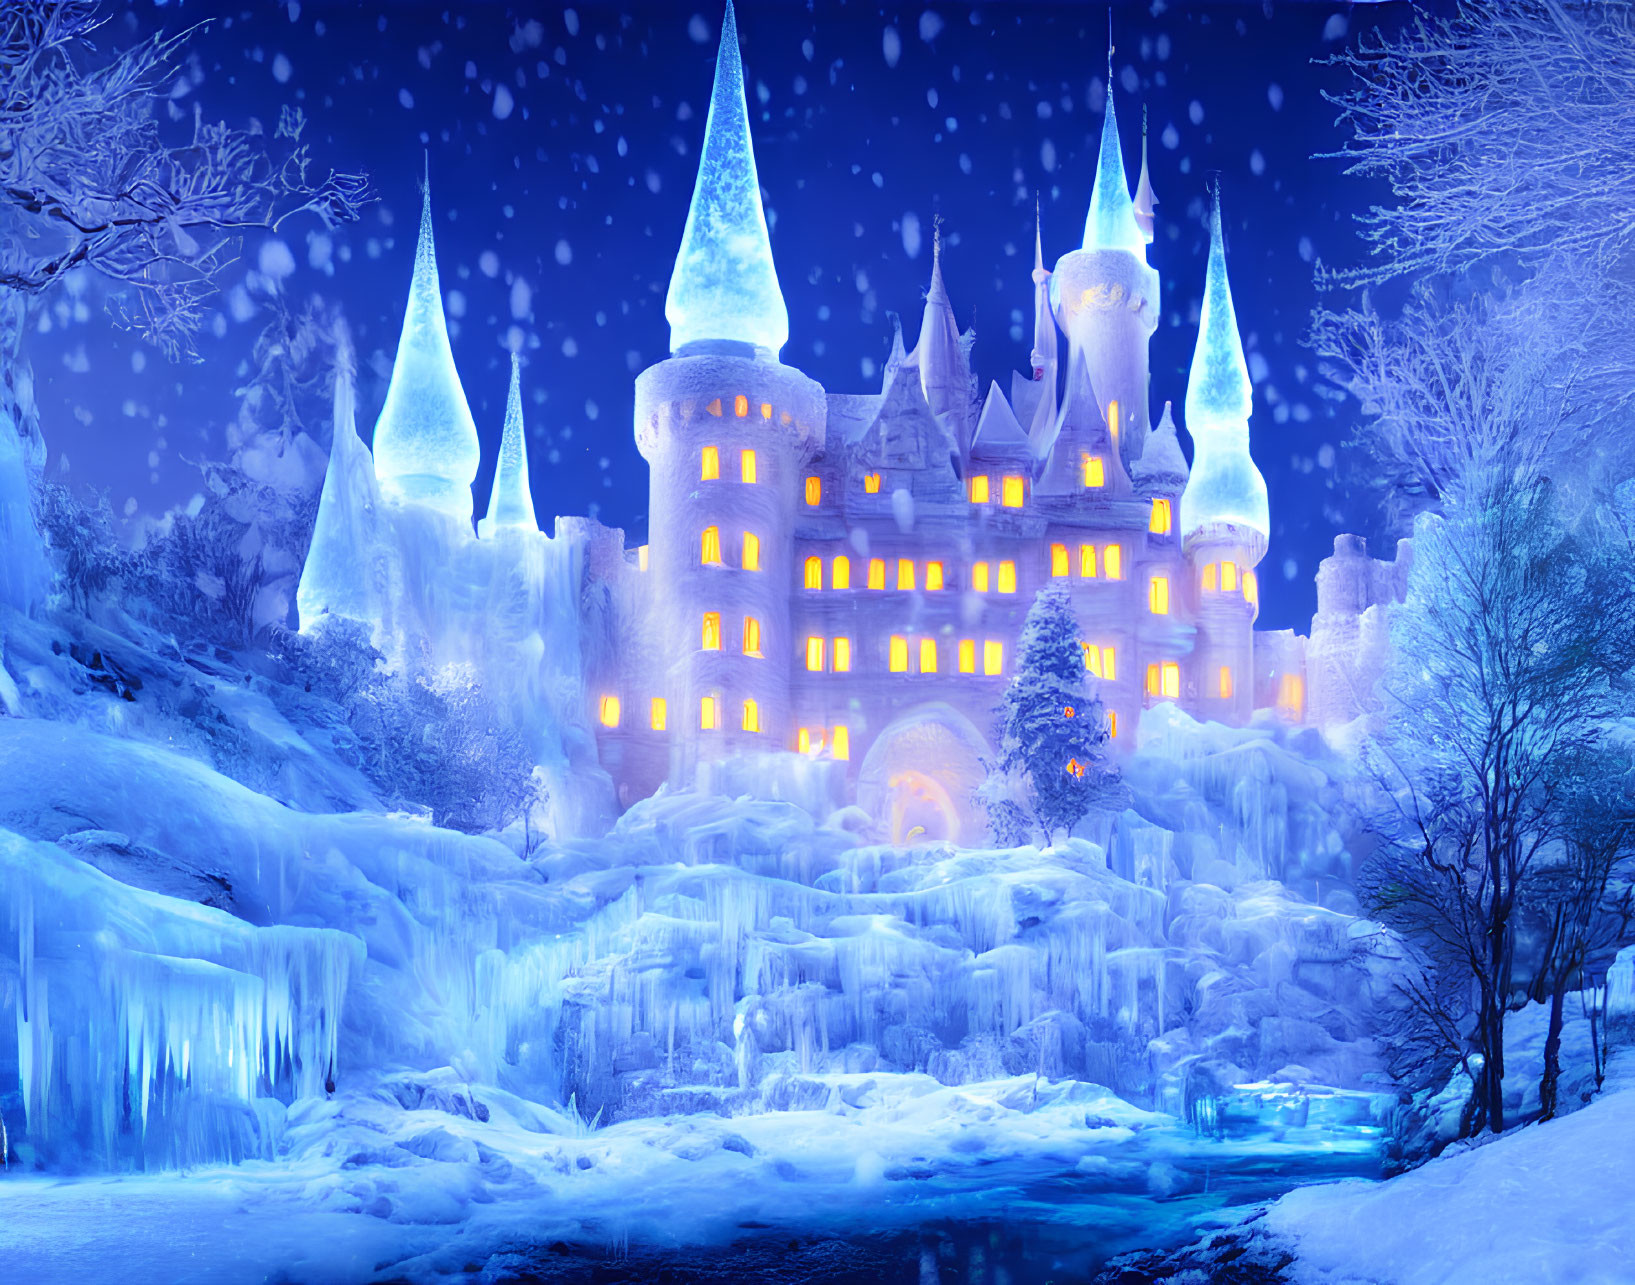 Illuminated castle in winter night with frozen waterfall